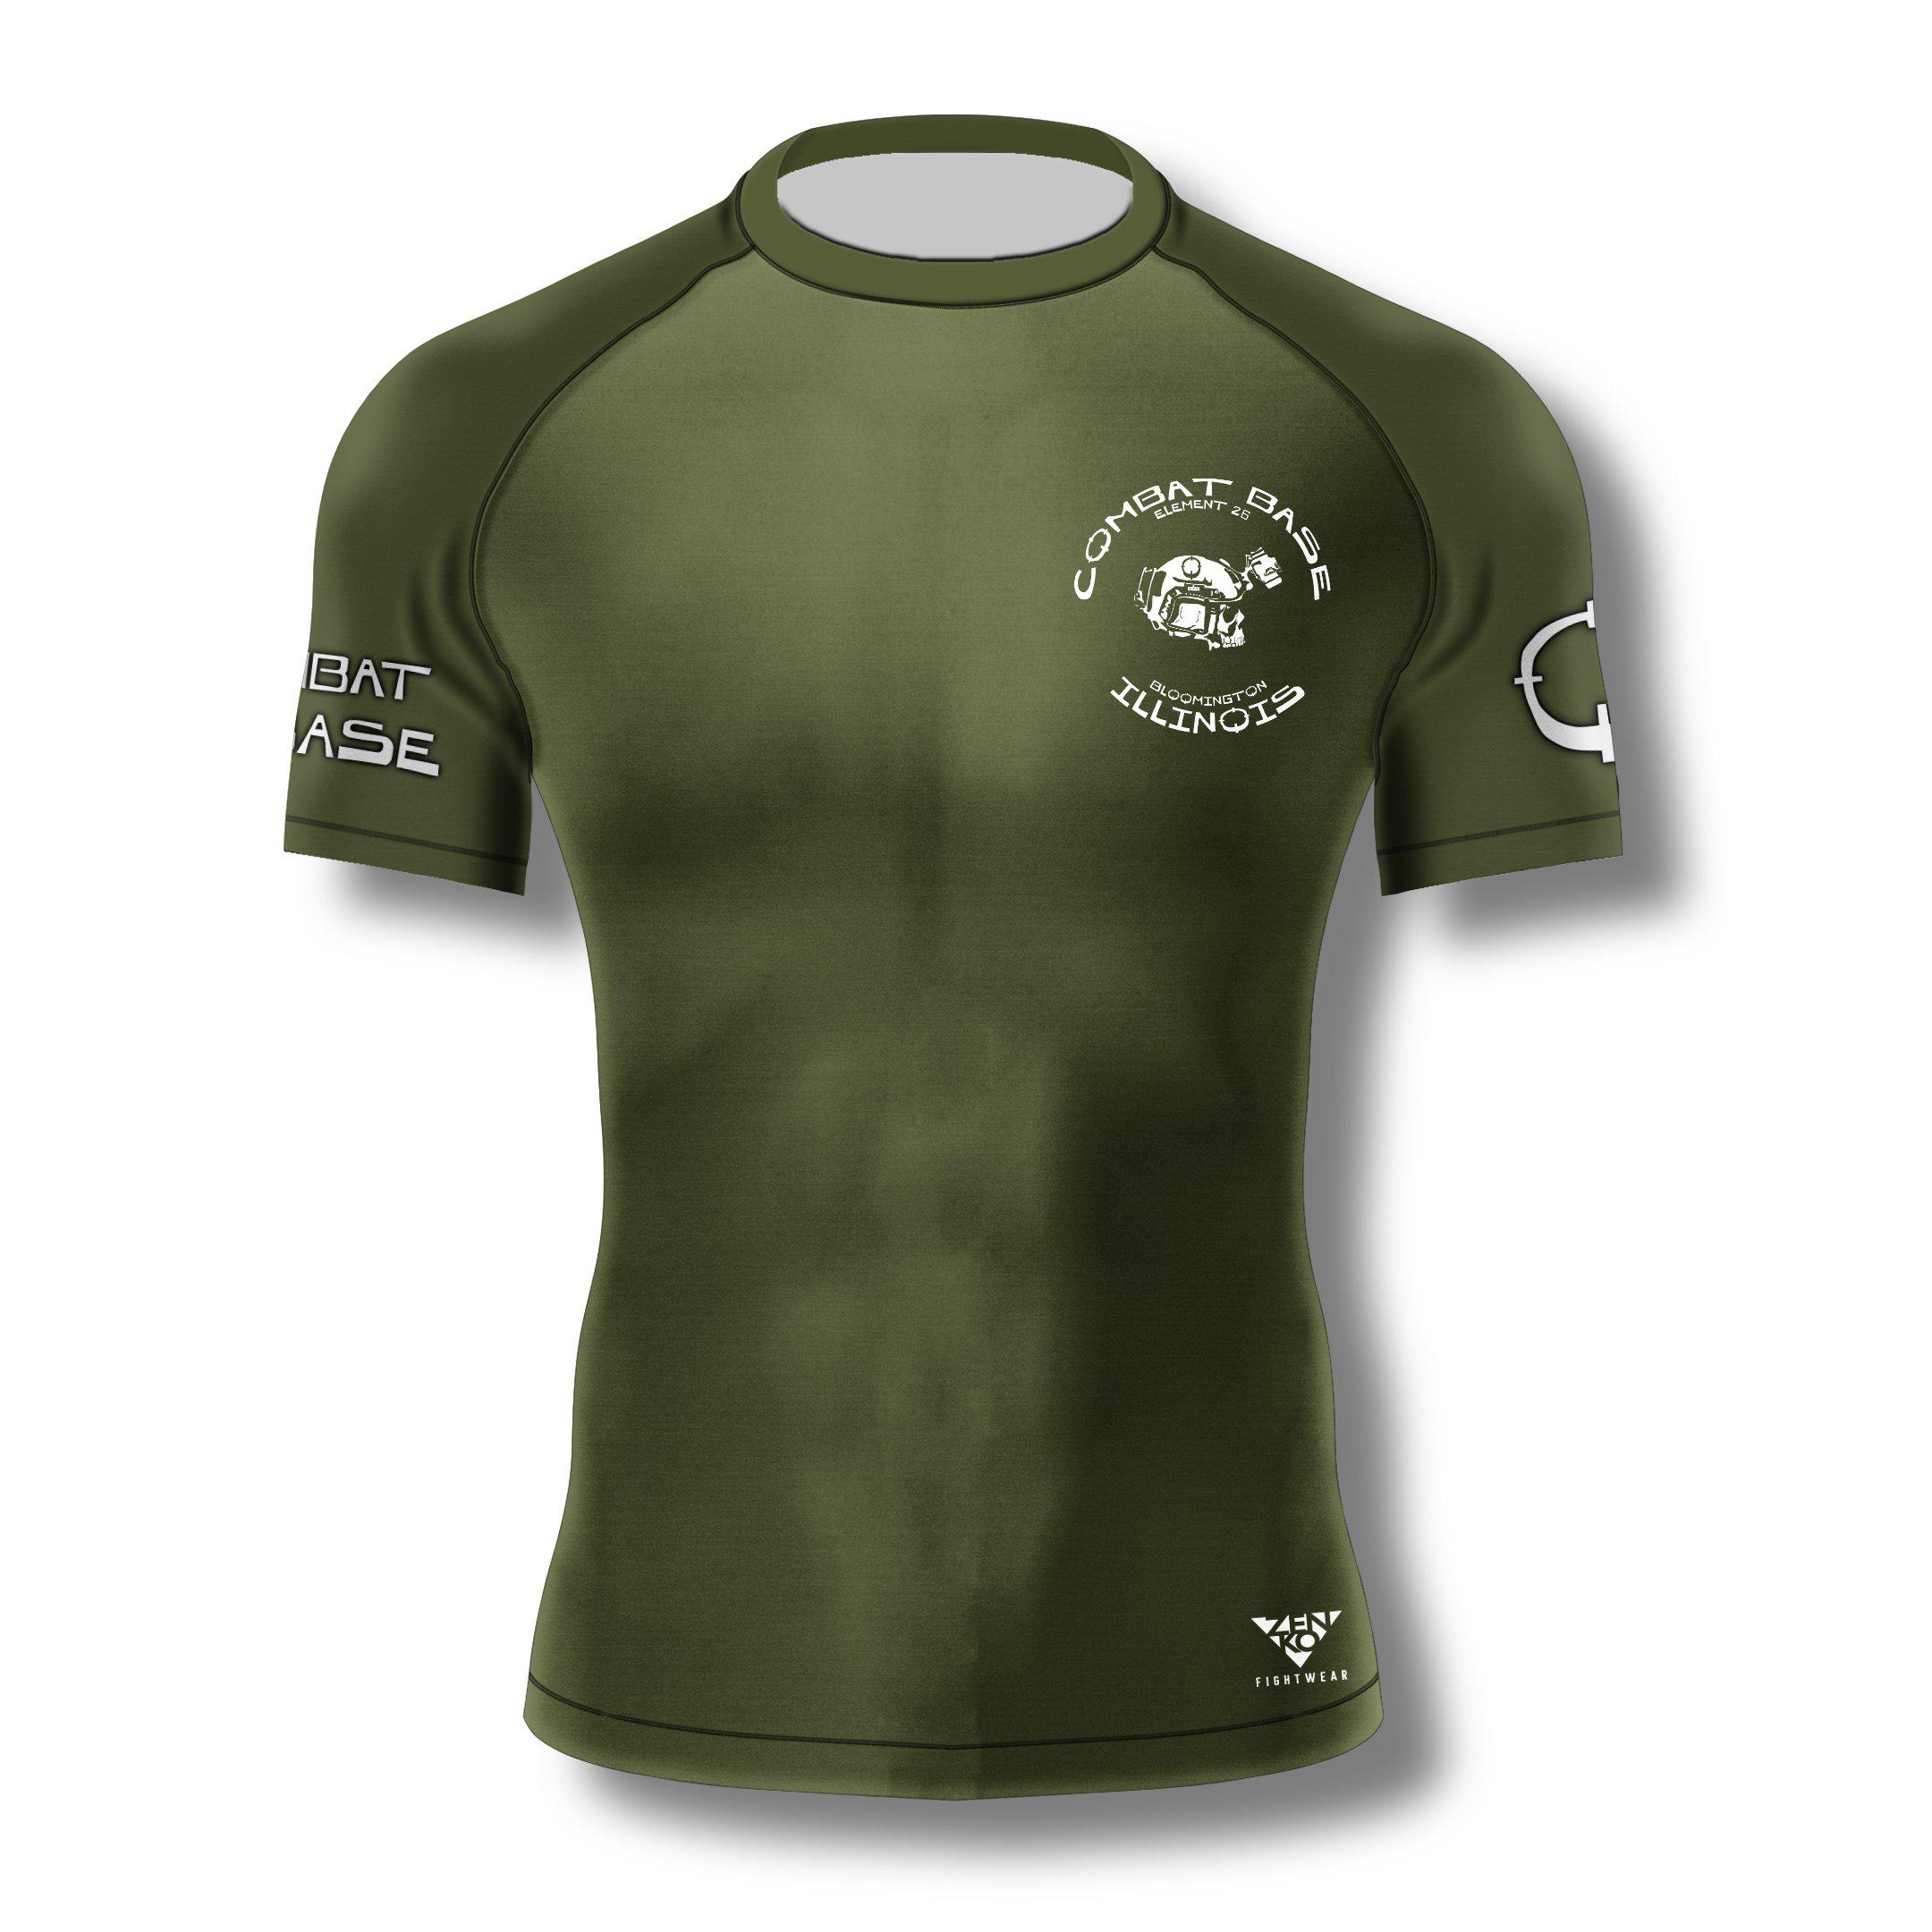 Combat Base Bloomington Rashguard (OD Green) Zenko Fightwear